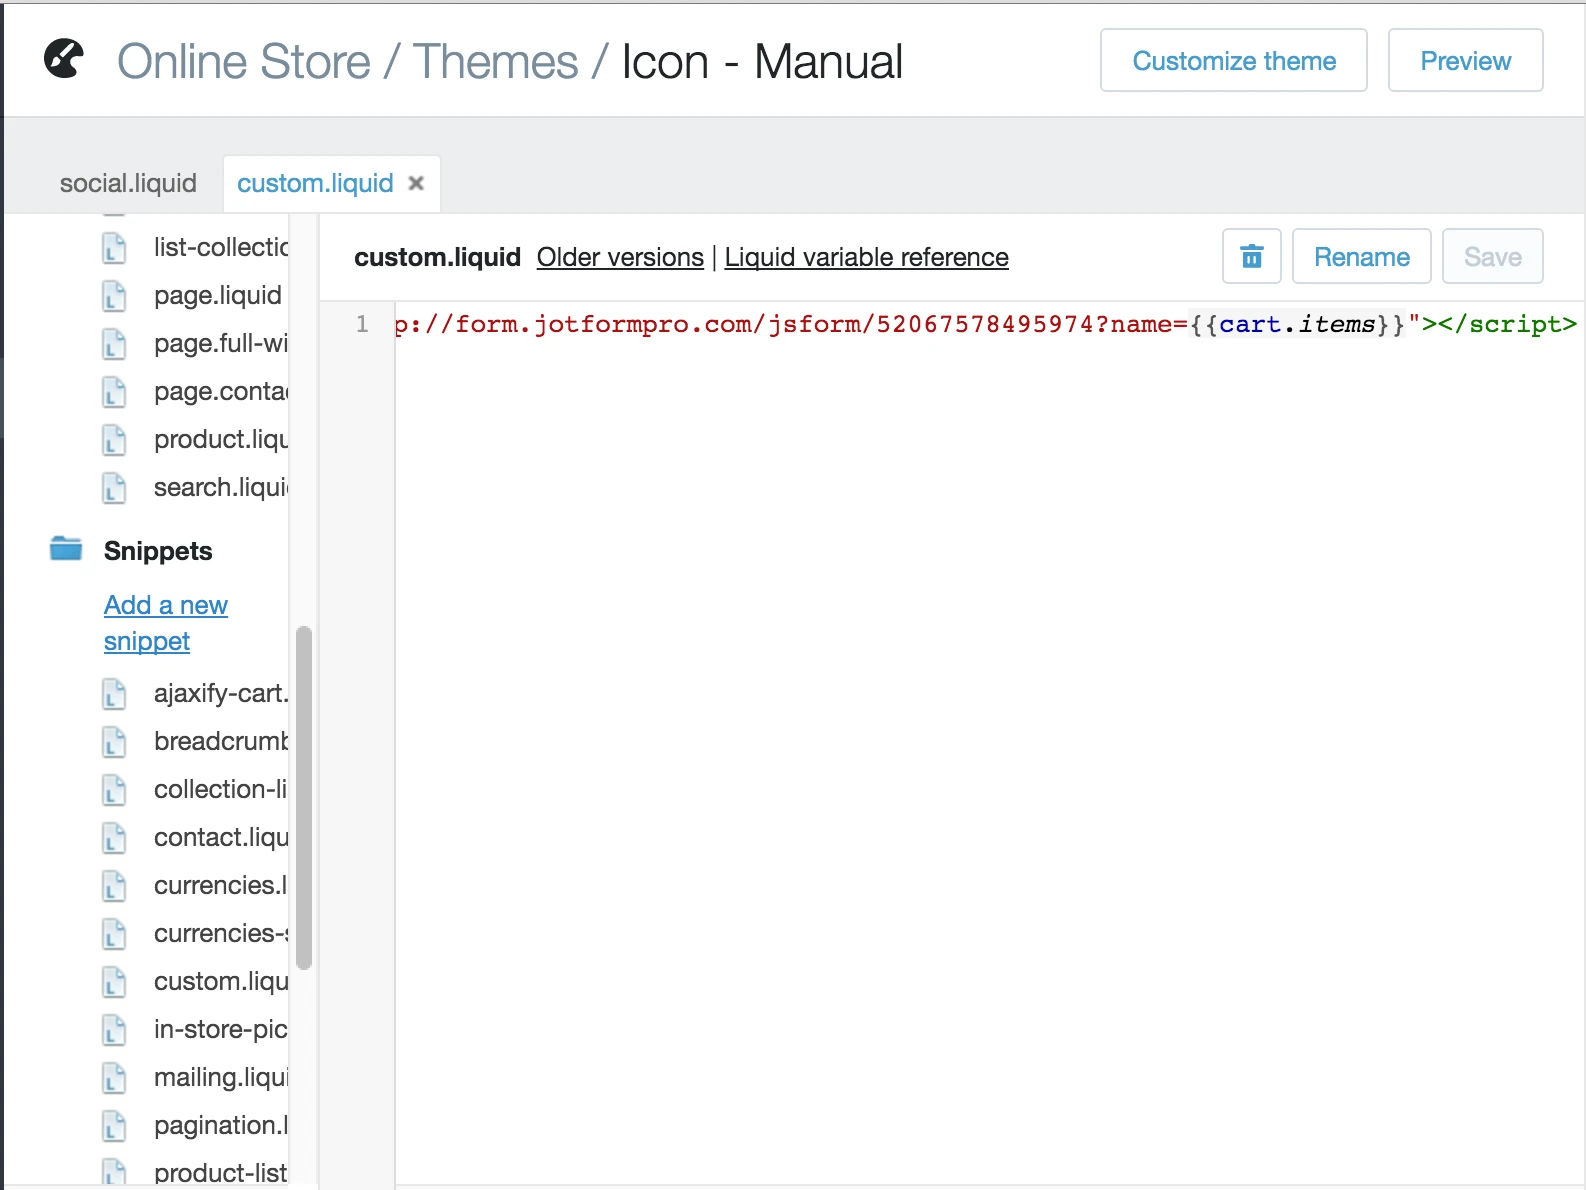 Shopify integration with Jotform Image 1 Screenshot 20